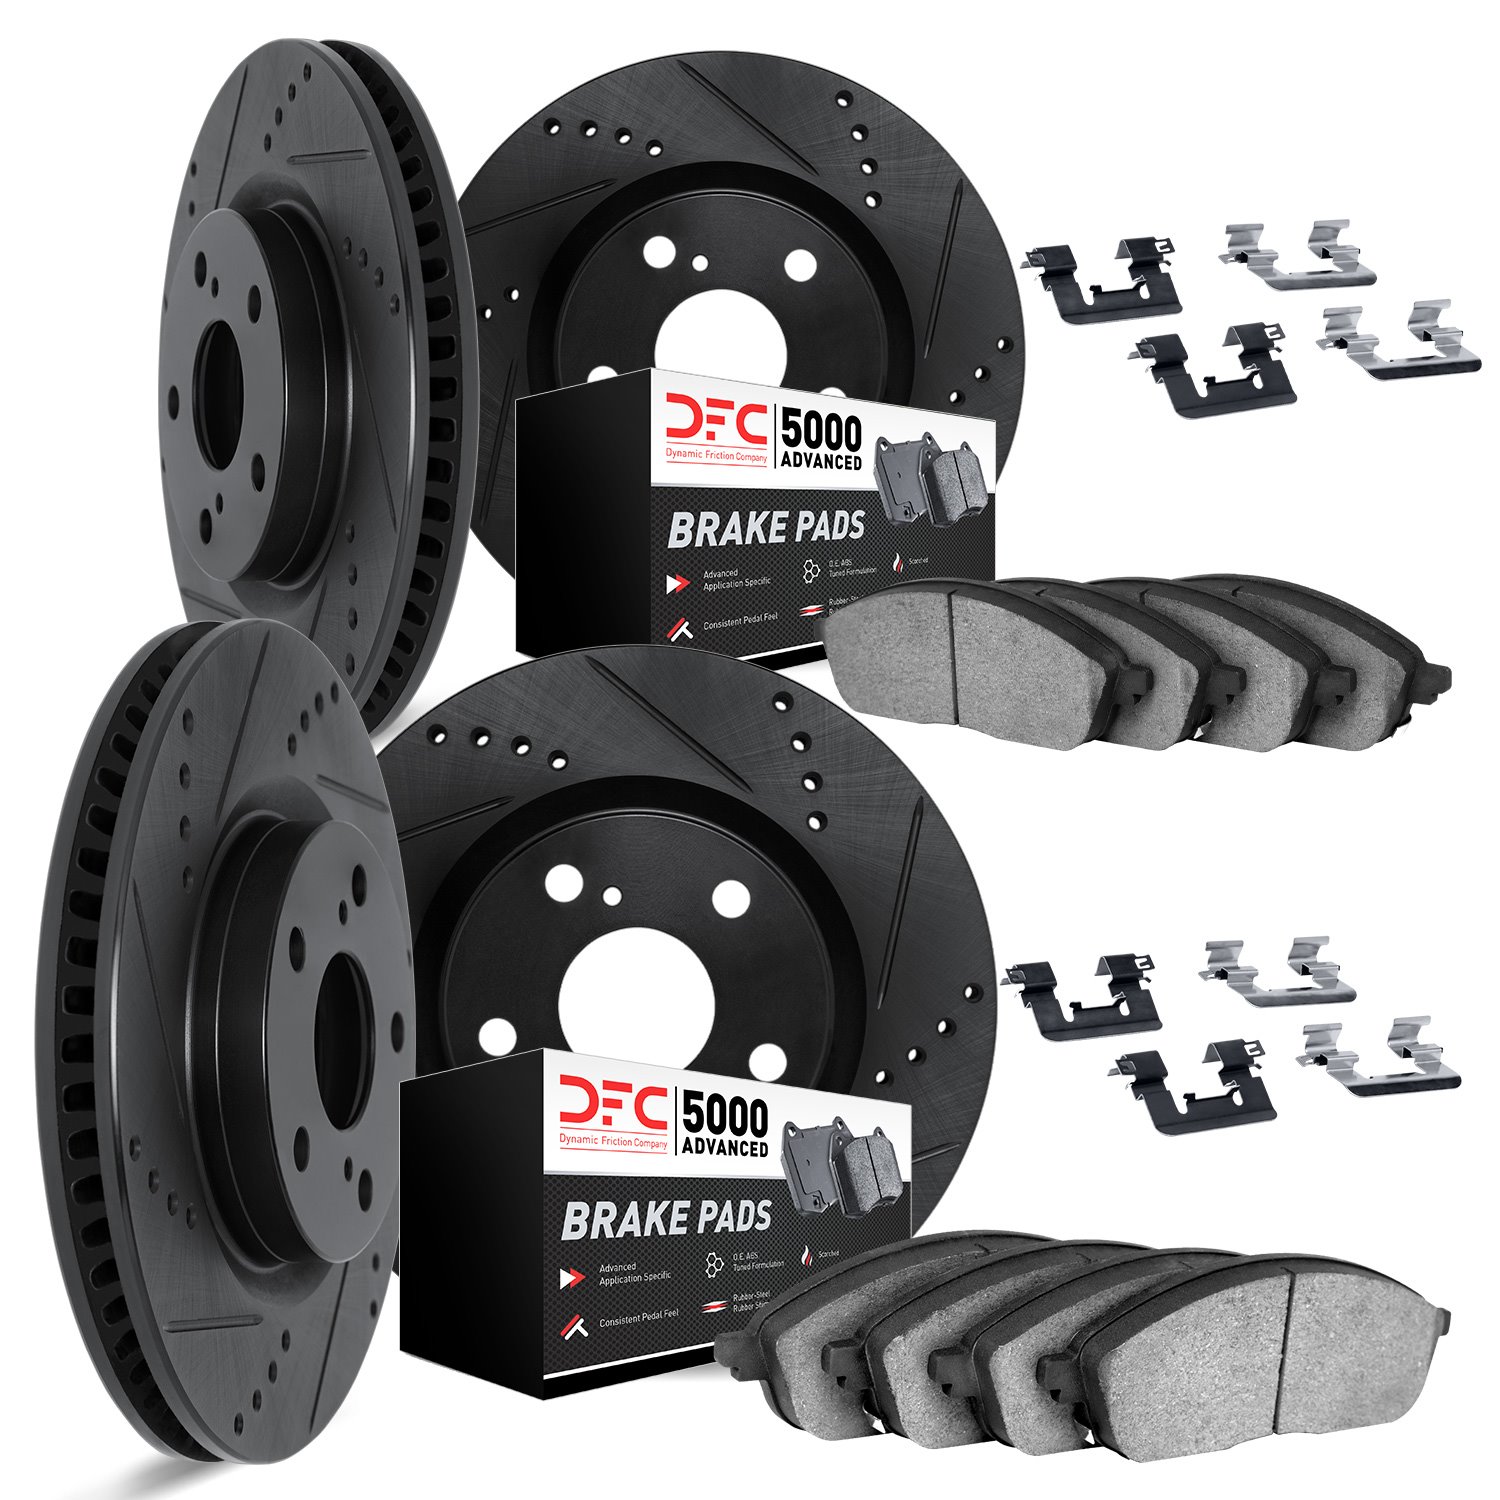 8514-40245 Drilled/Slotted Brake Rotors w/5000 Advanced Brake Pads Kit & Hardware [Black], 2006-2006 Mopar, Position: Front and